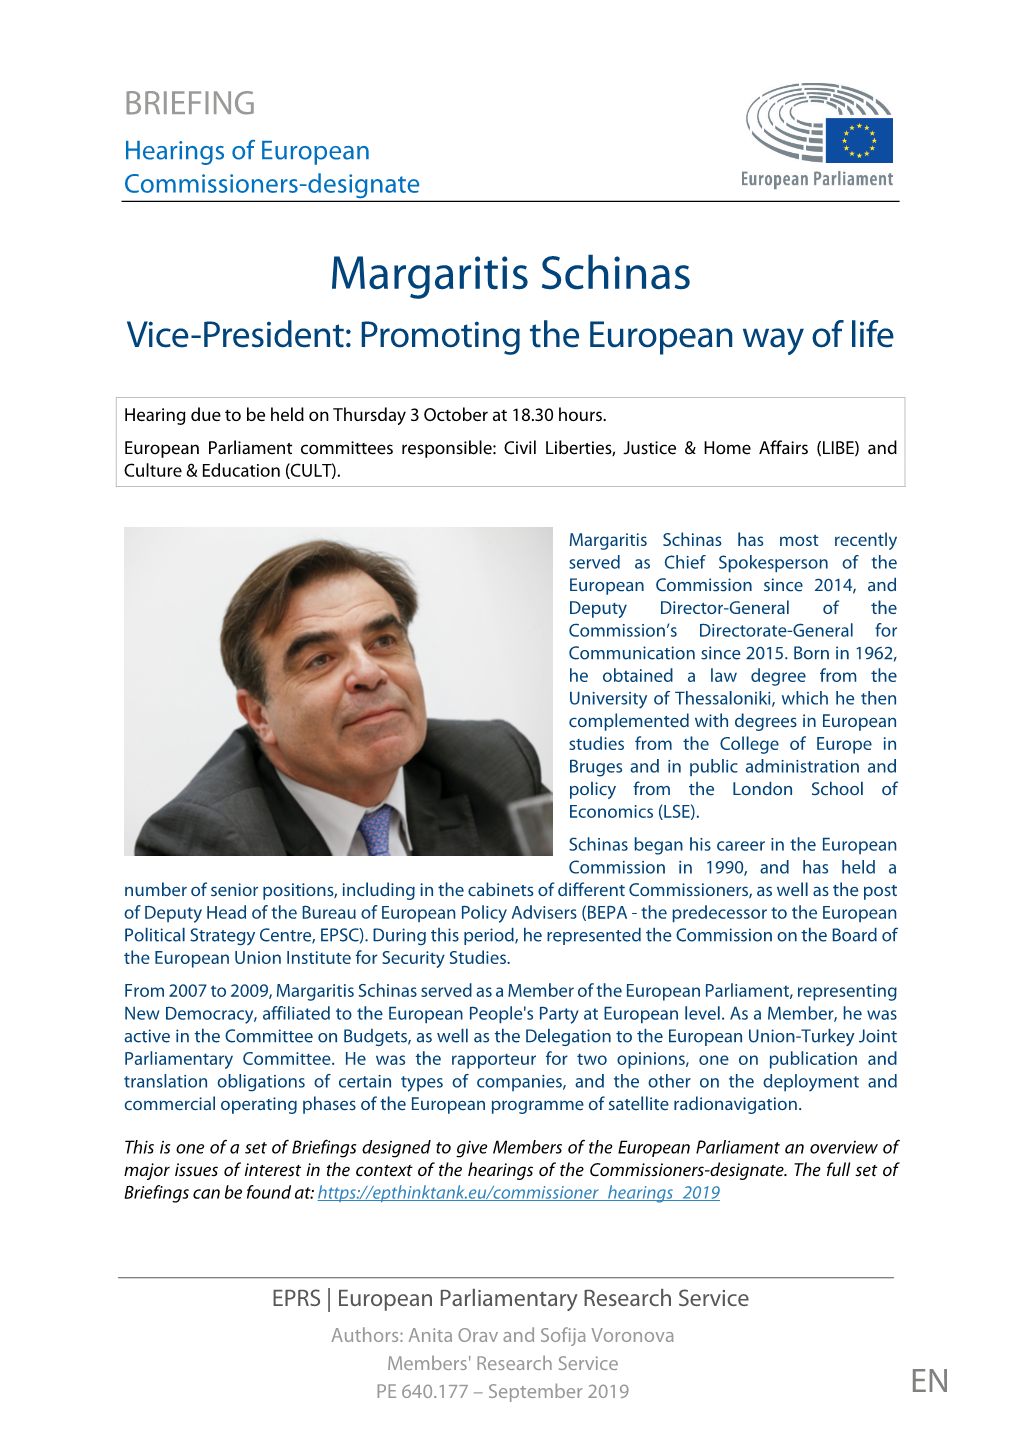 Margaritas Schinas - VP: Promoting the European Way of Life